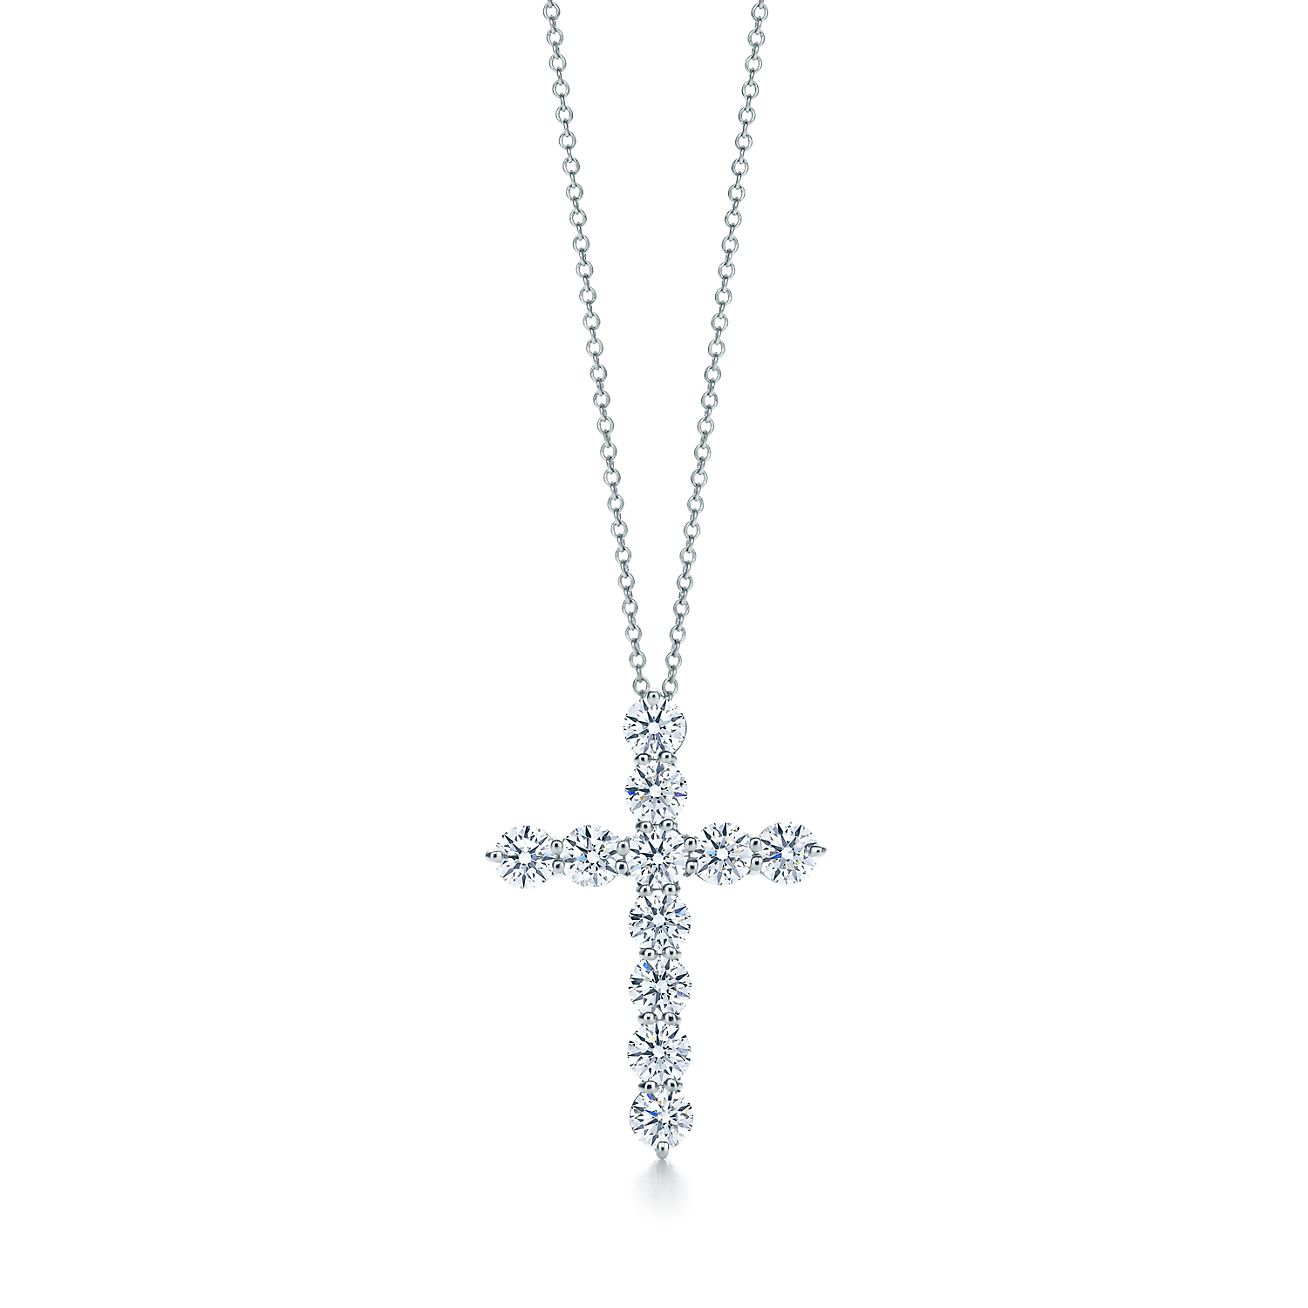 tiffany small silver cross necklace